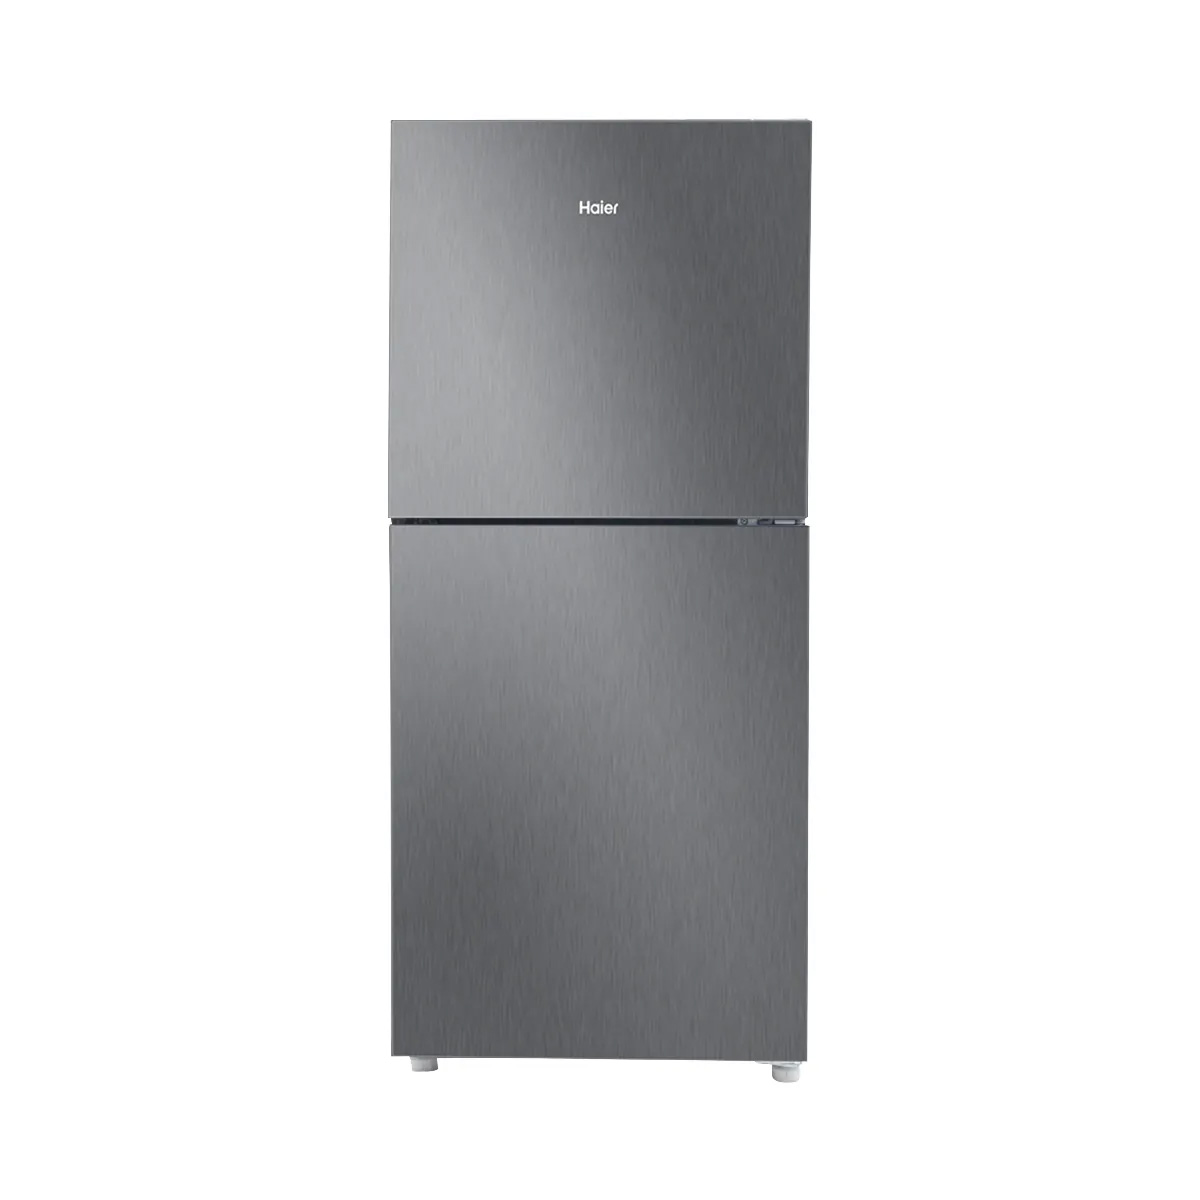 Haier Refrigerator 216 EBS Silver